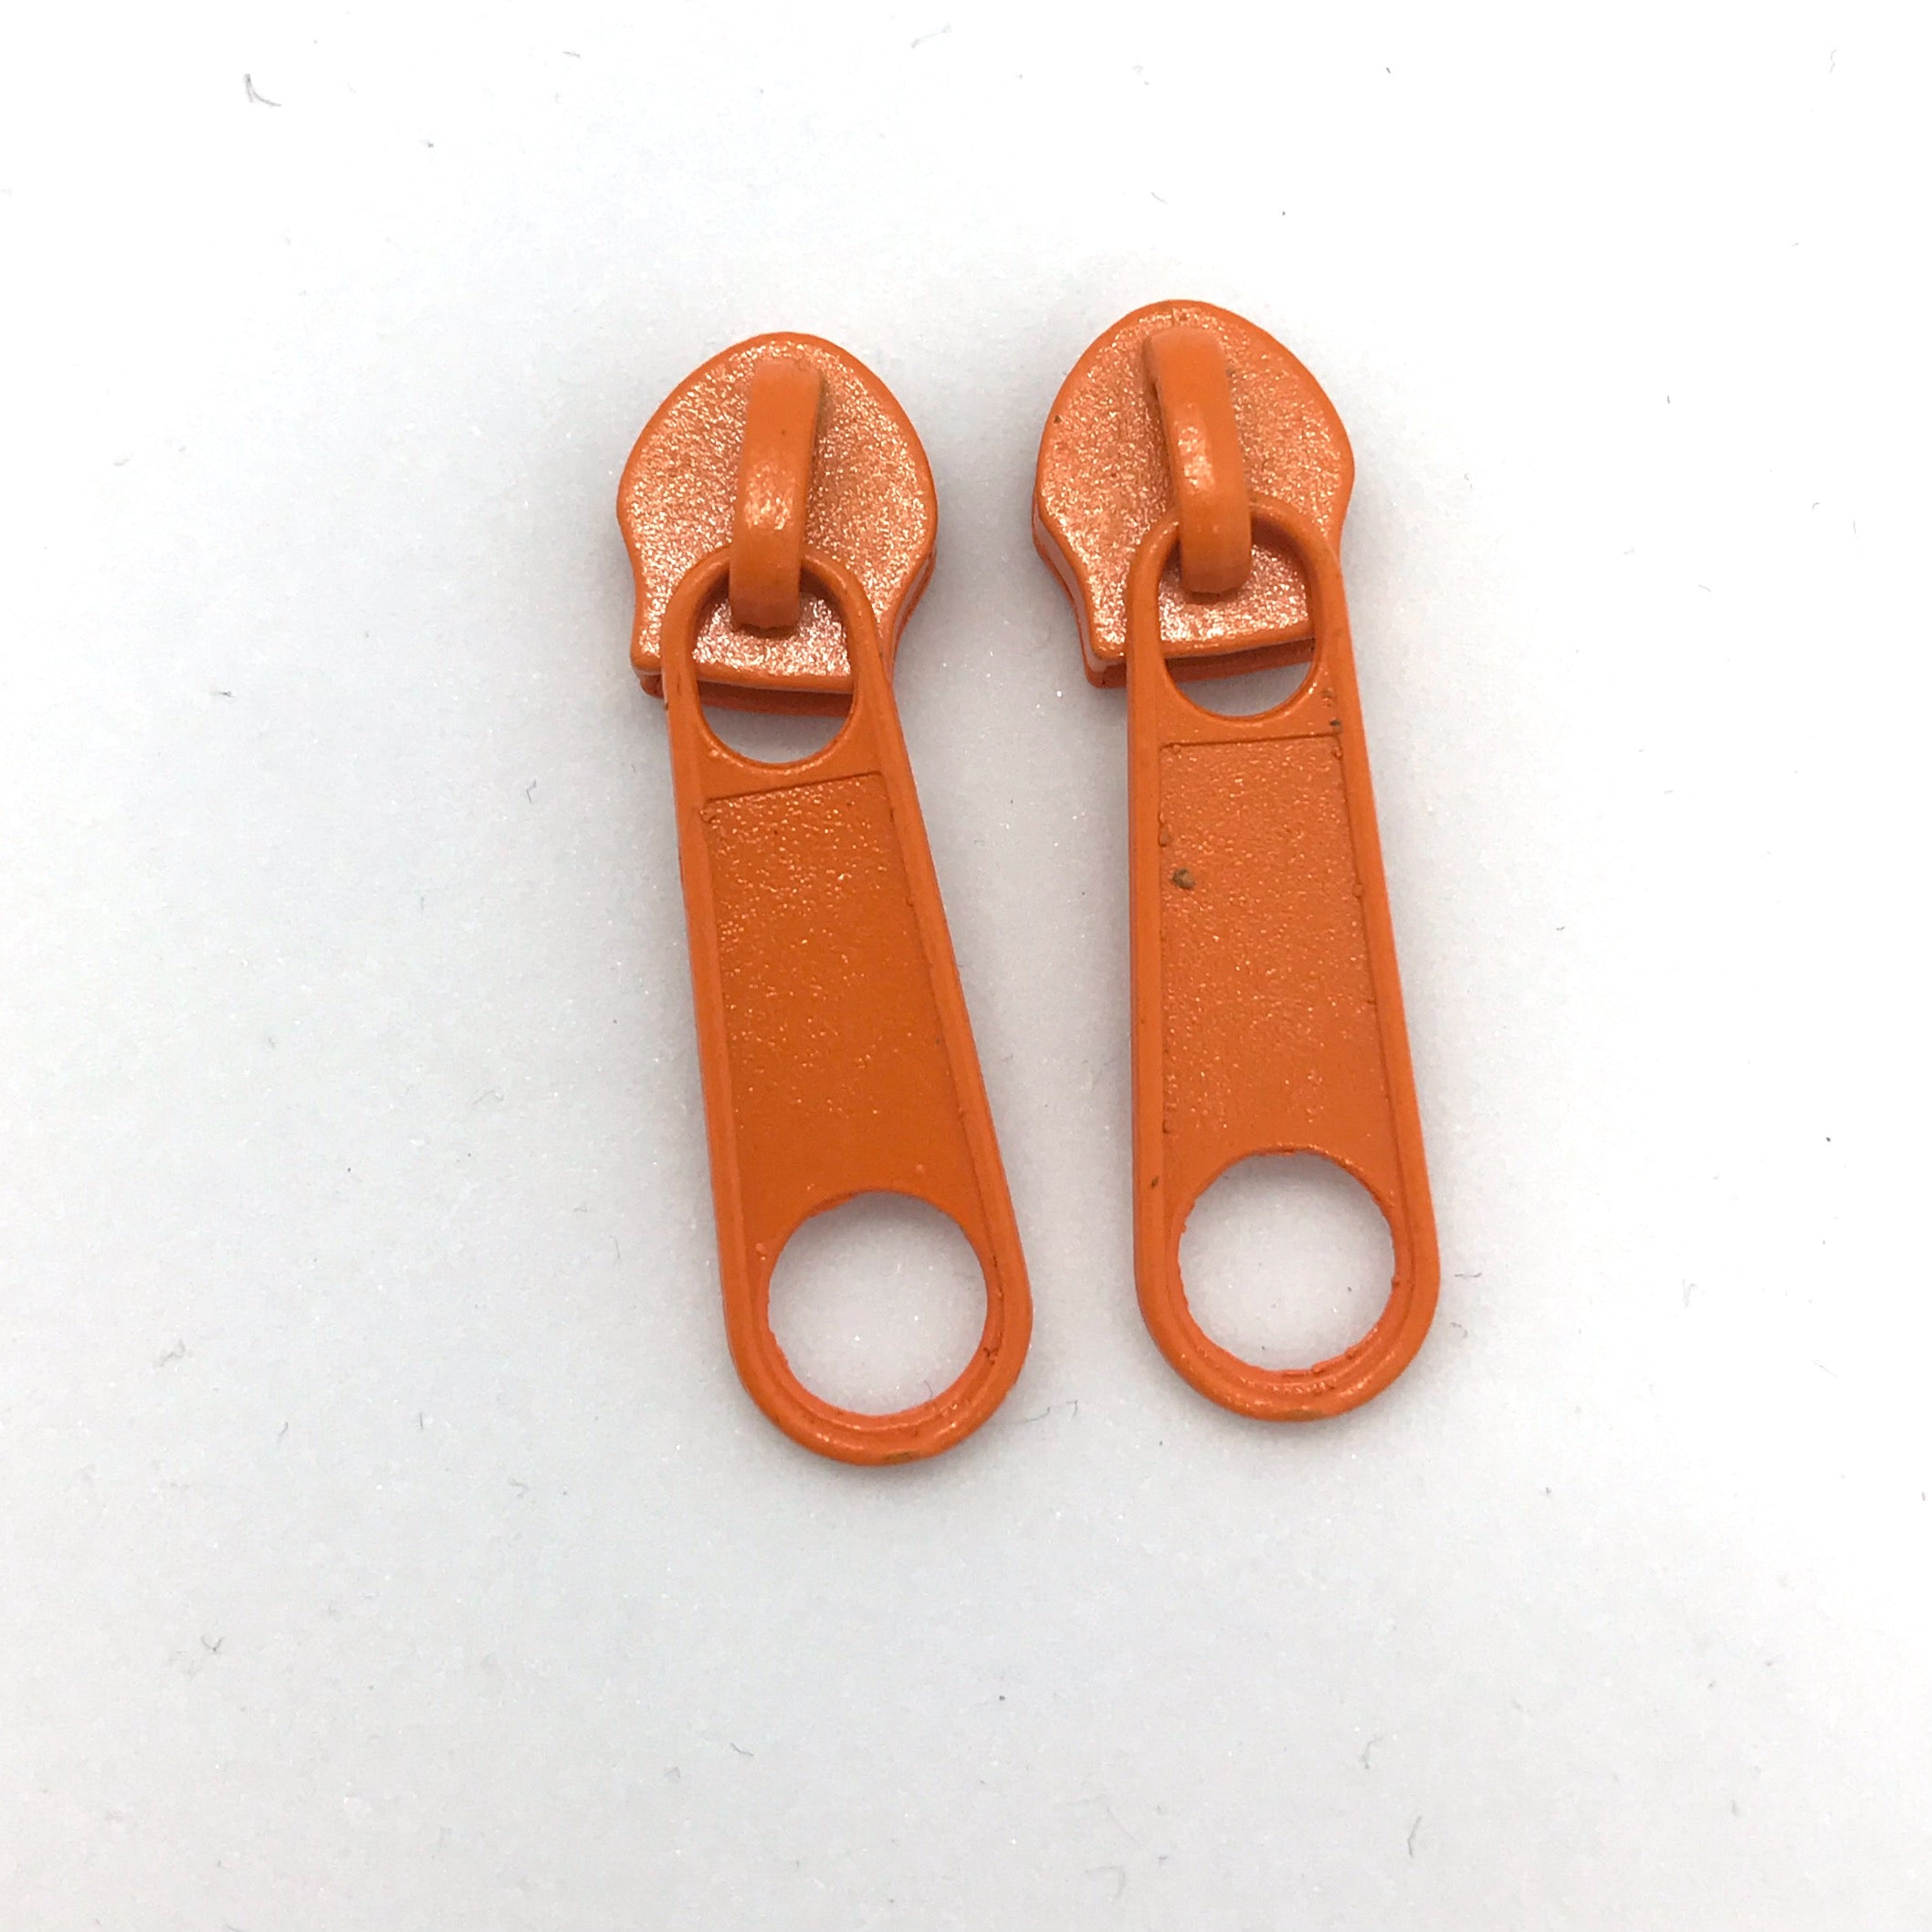 continuous long chain standard zipper tape in orange